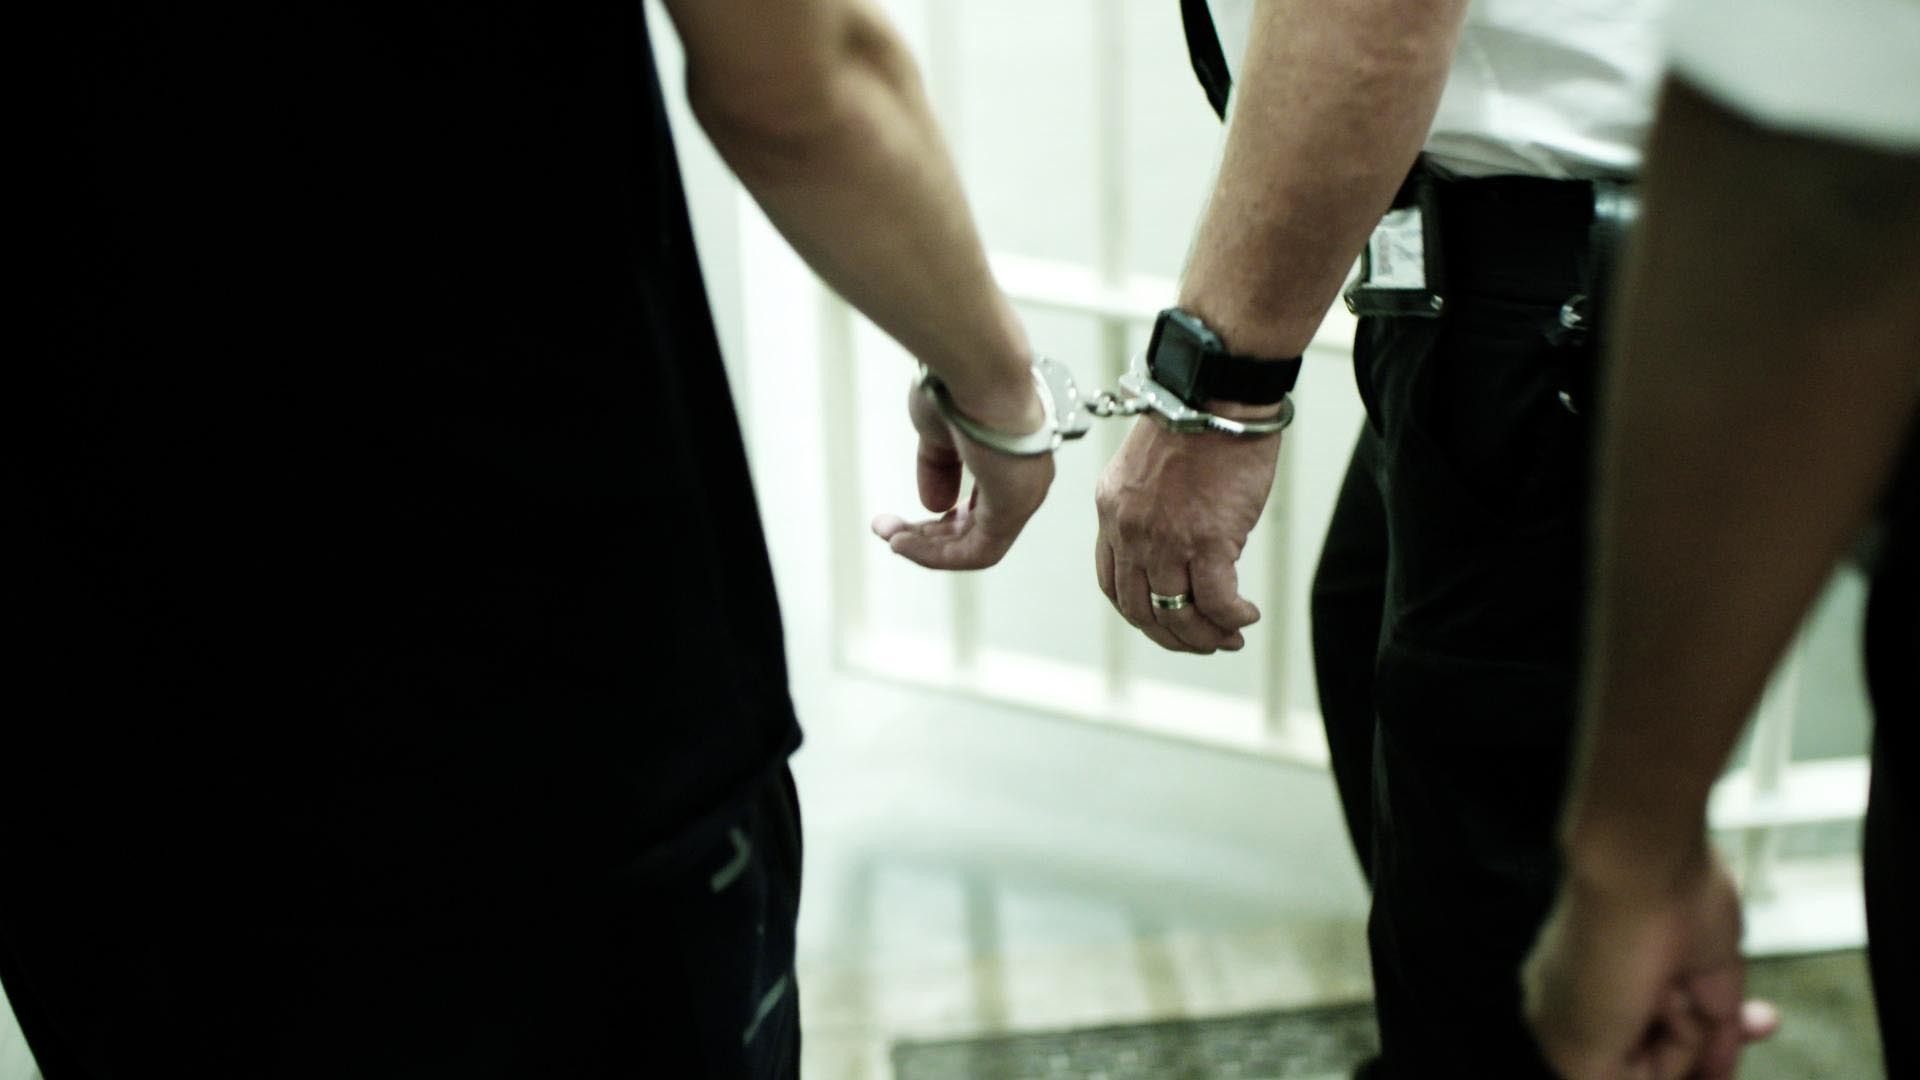 Catching Paedophiles: Crime and Punishment